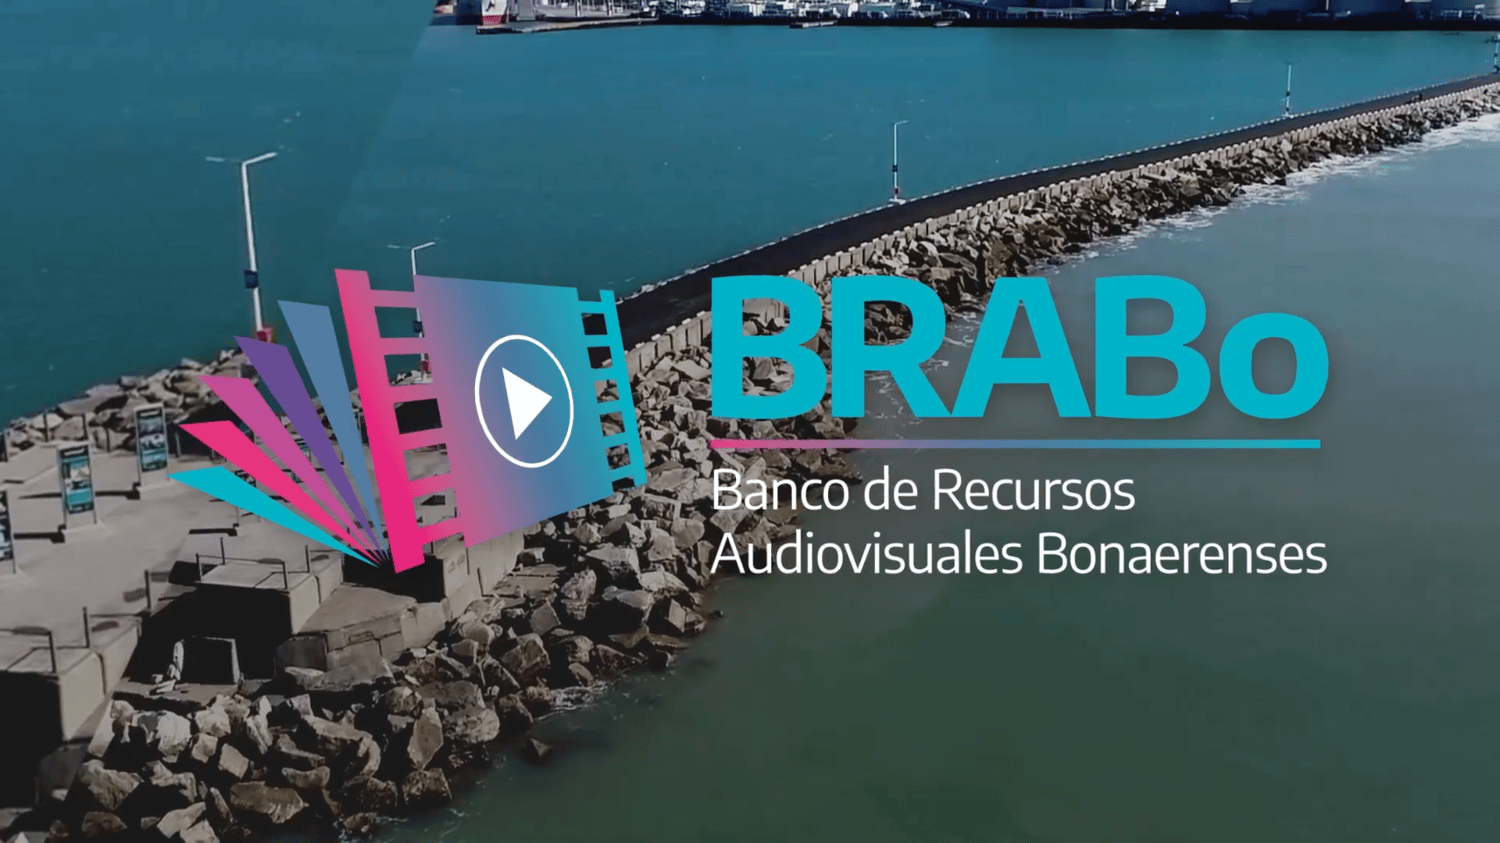 Banco de Recursos Audiovisuales Bonaerenses (BRABo